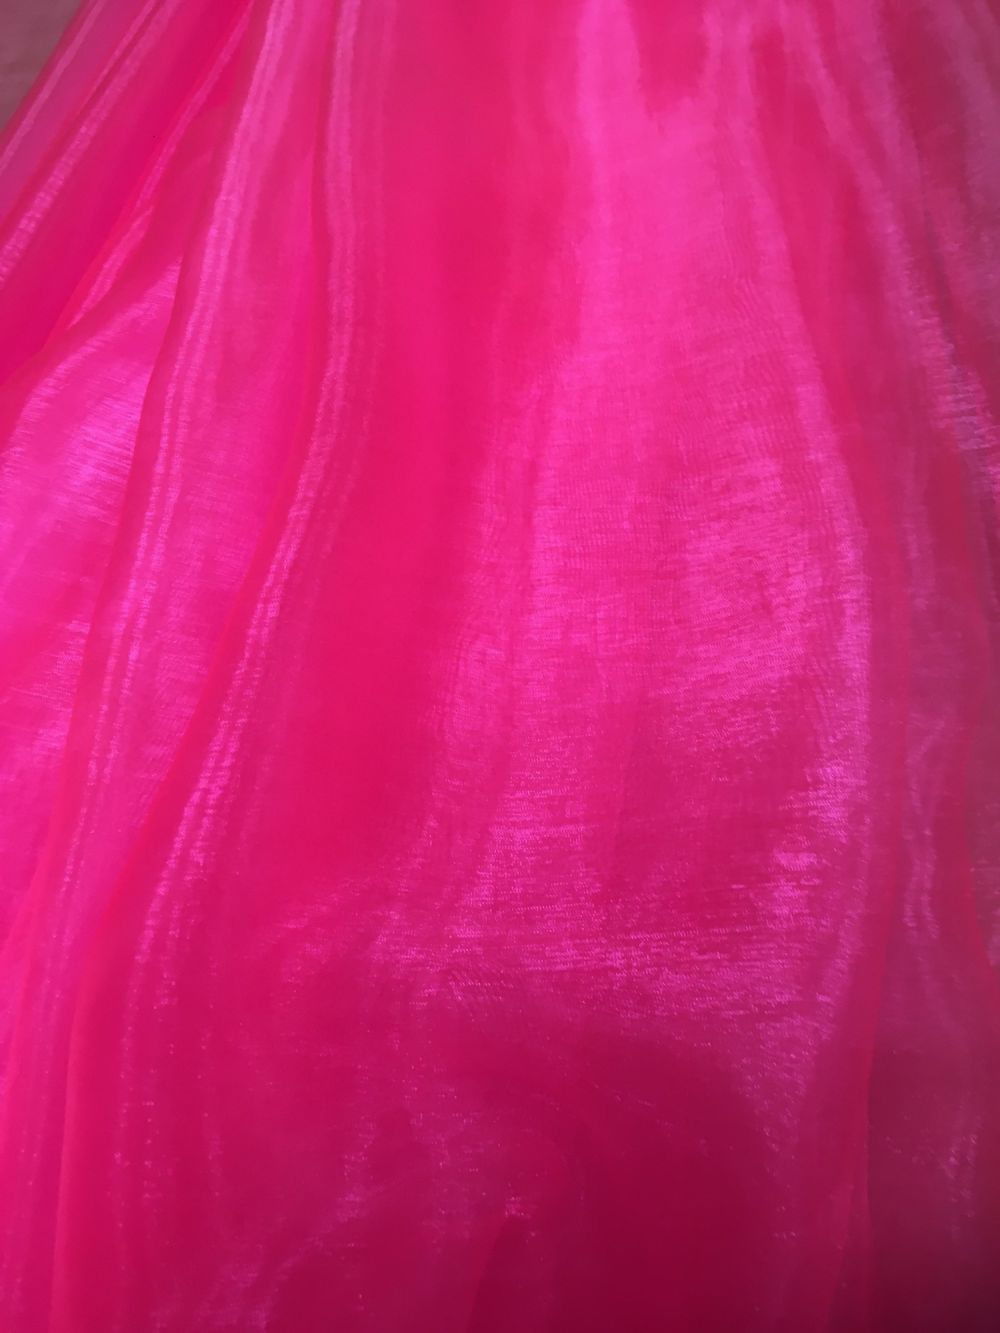 Hot Cerise Pink Organza Fabric 150 cm width 60 inches